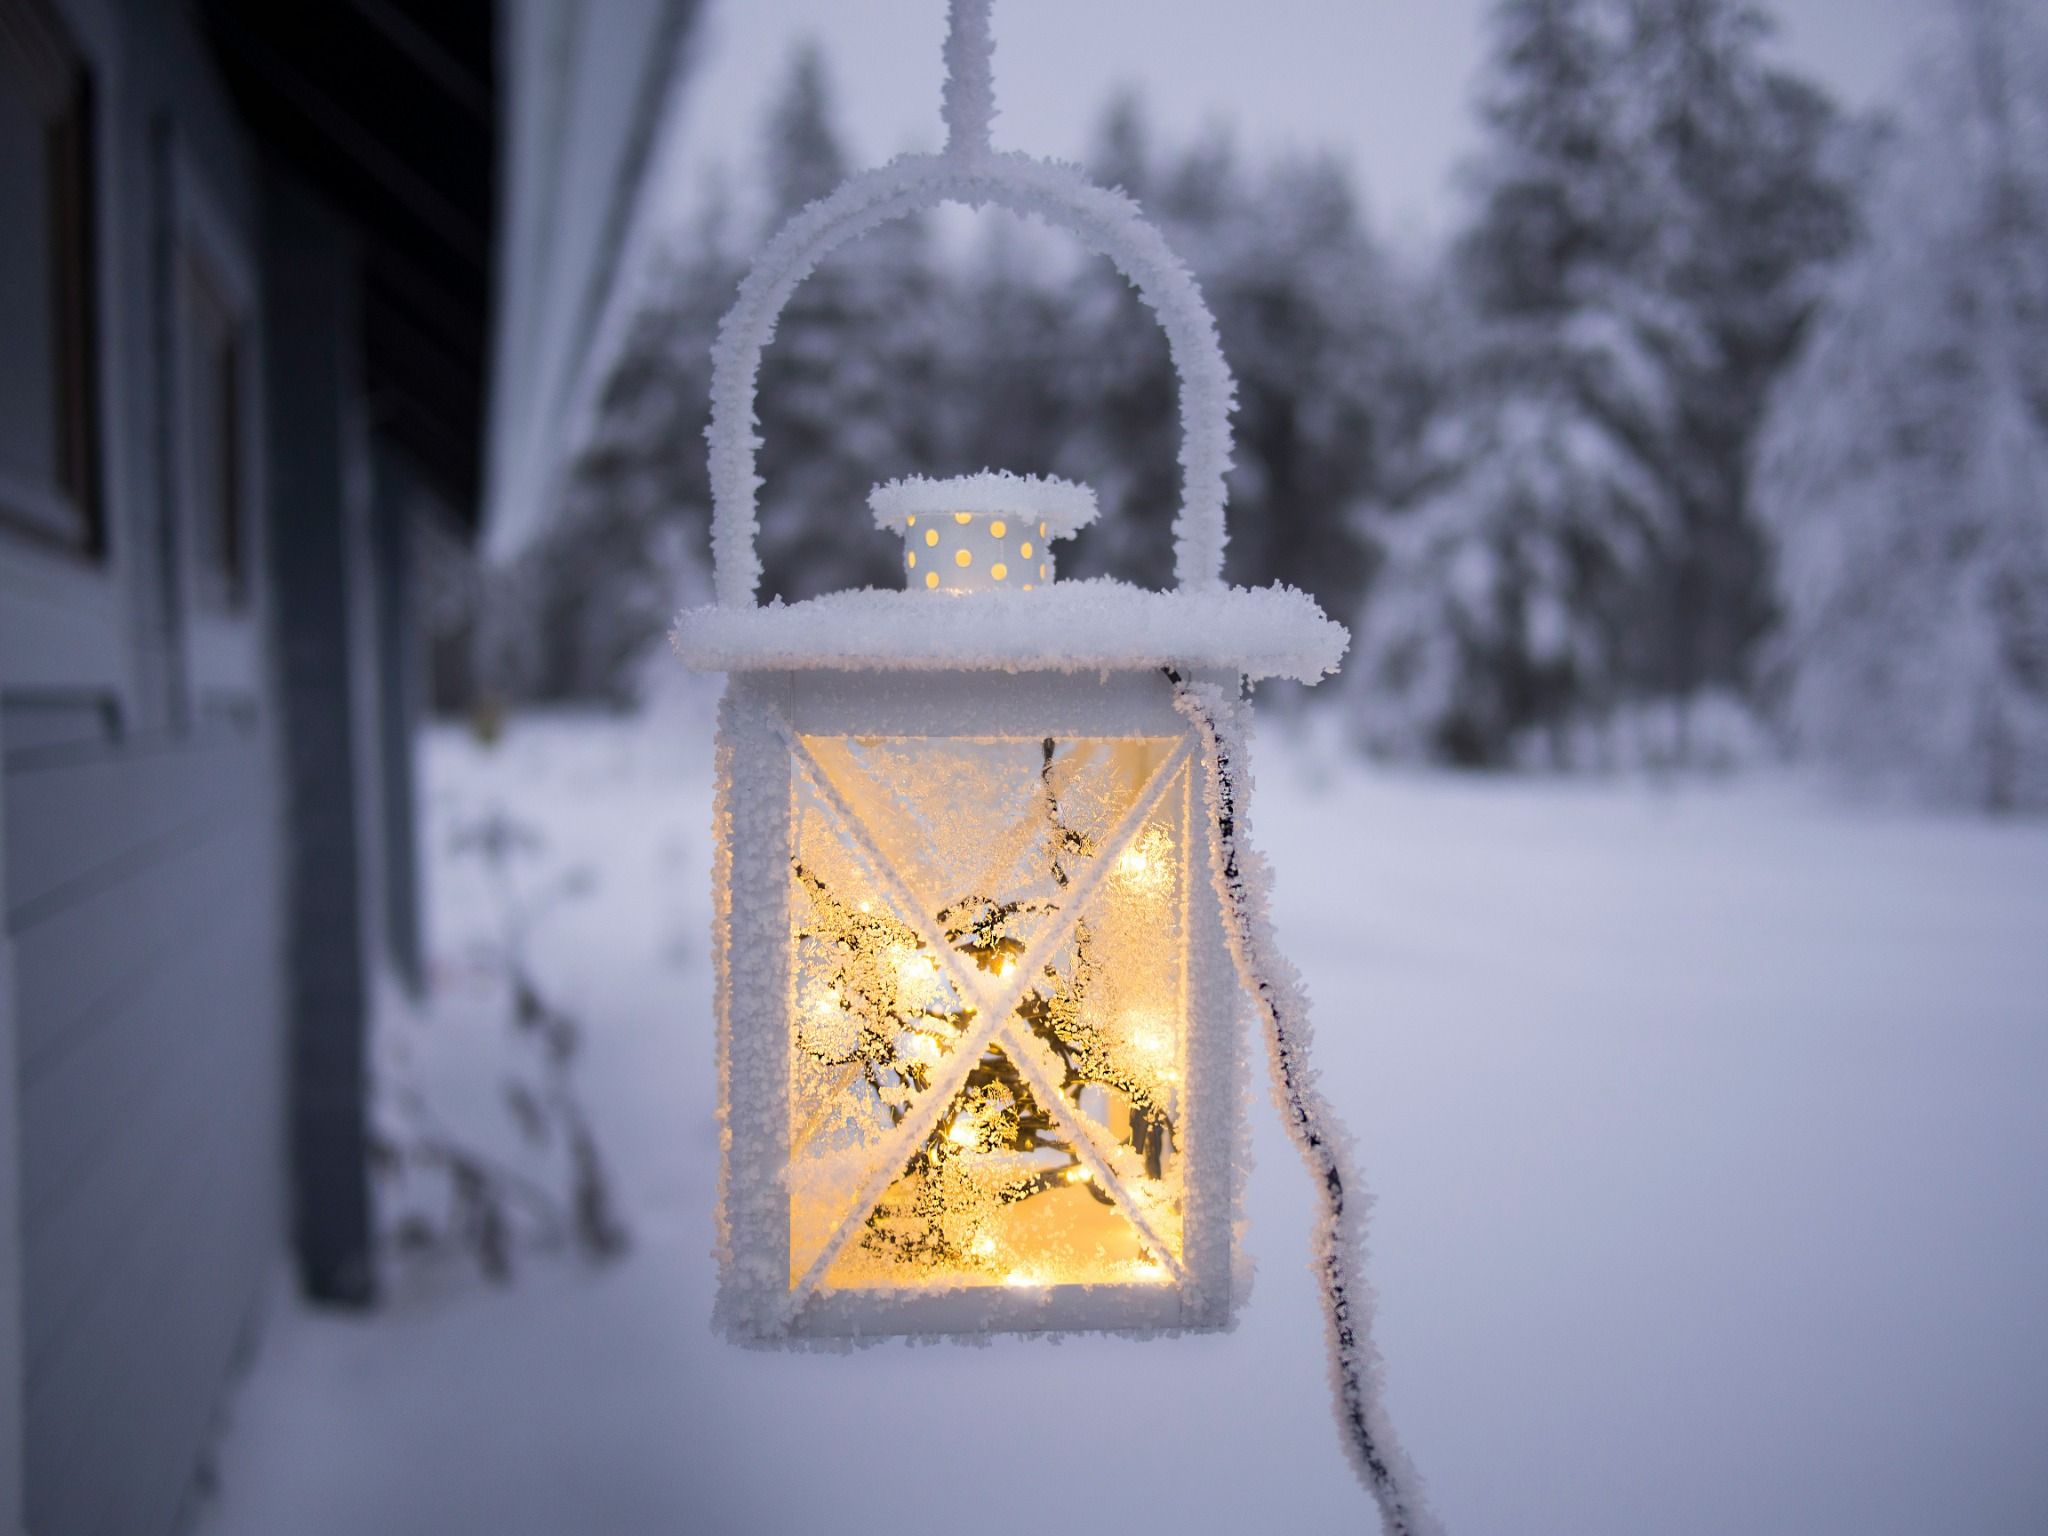 Frosty lantern winter night